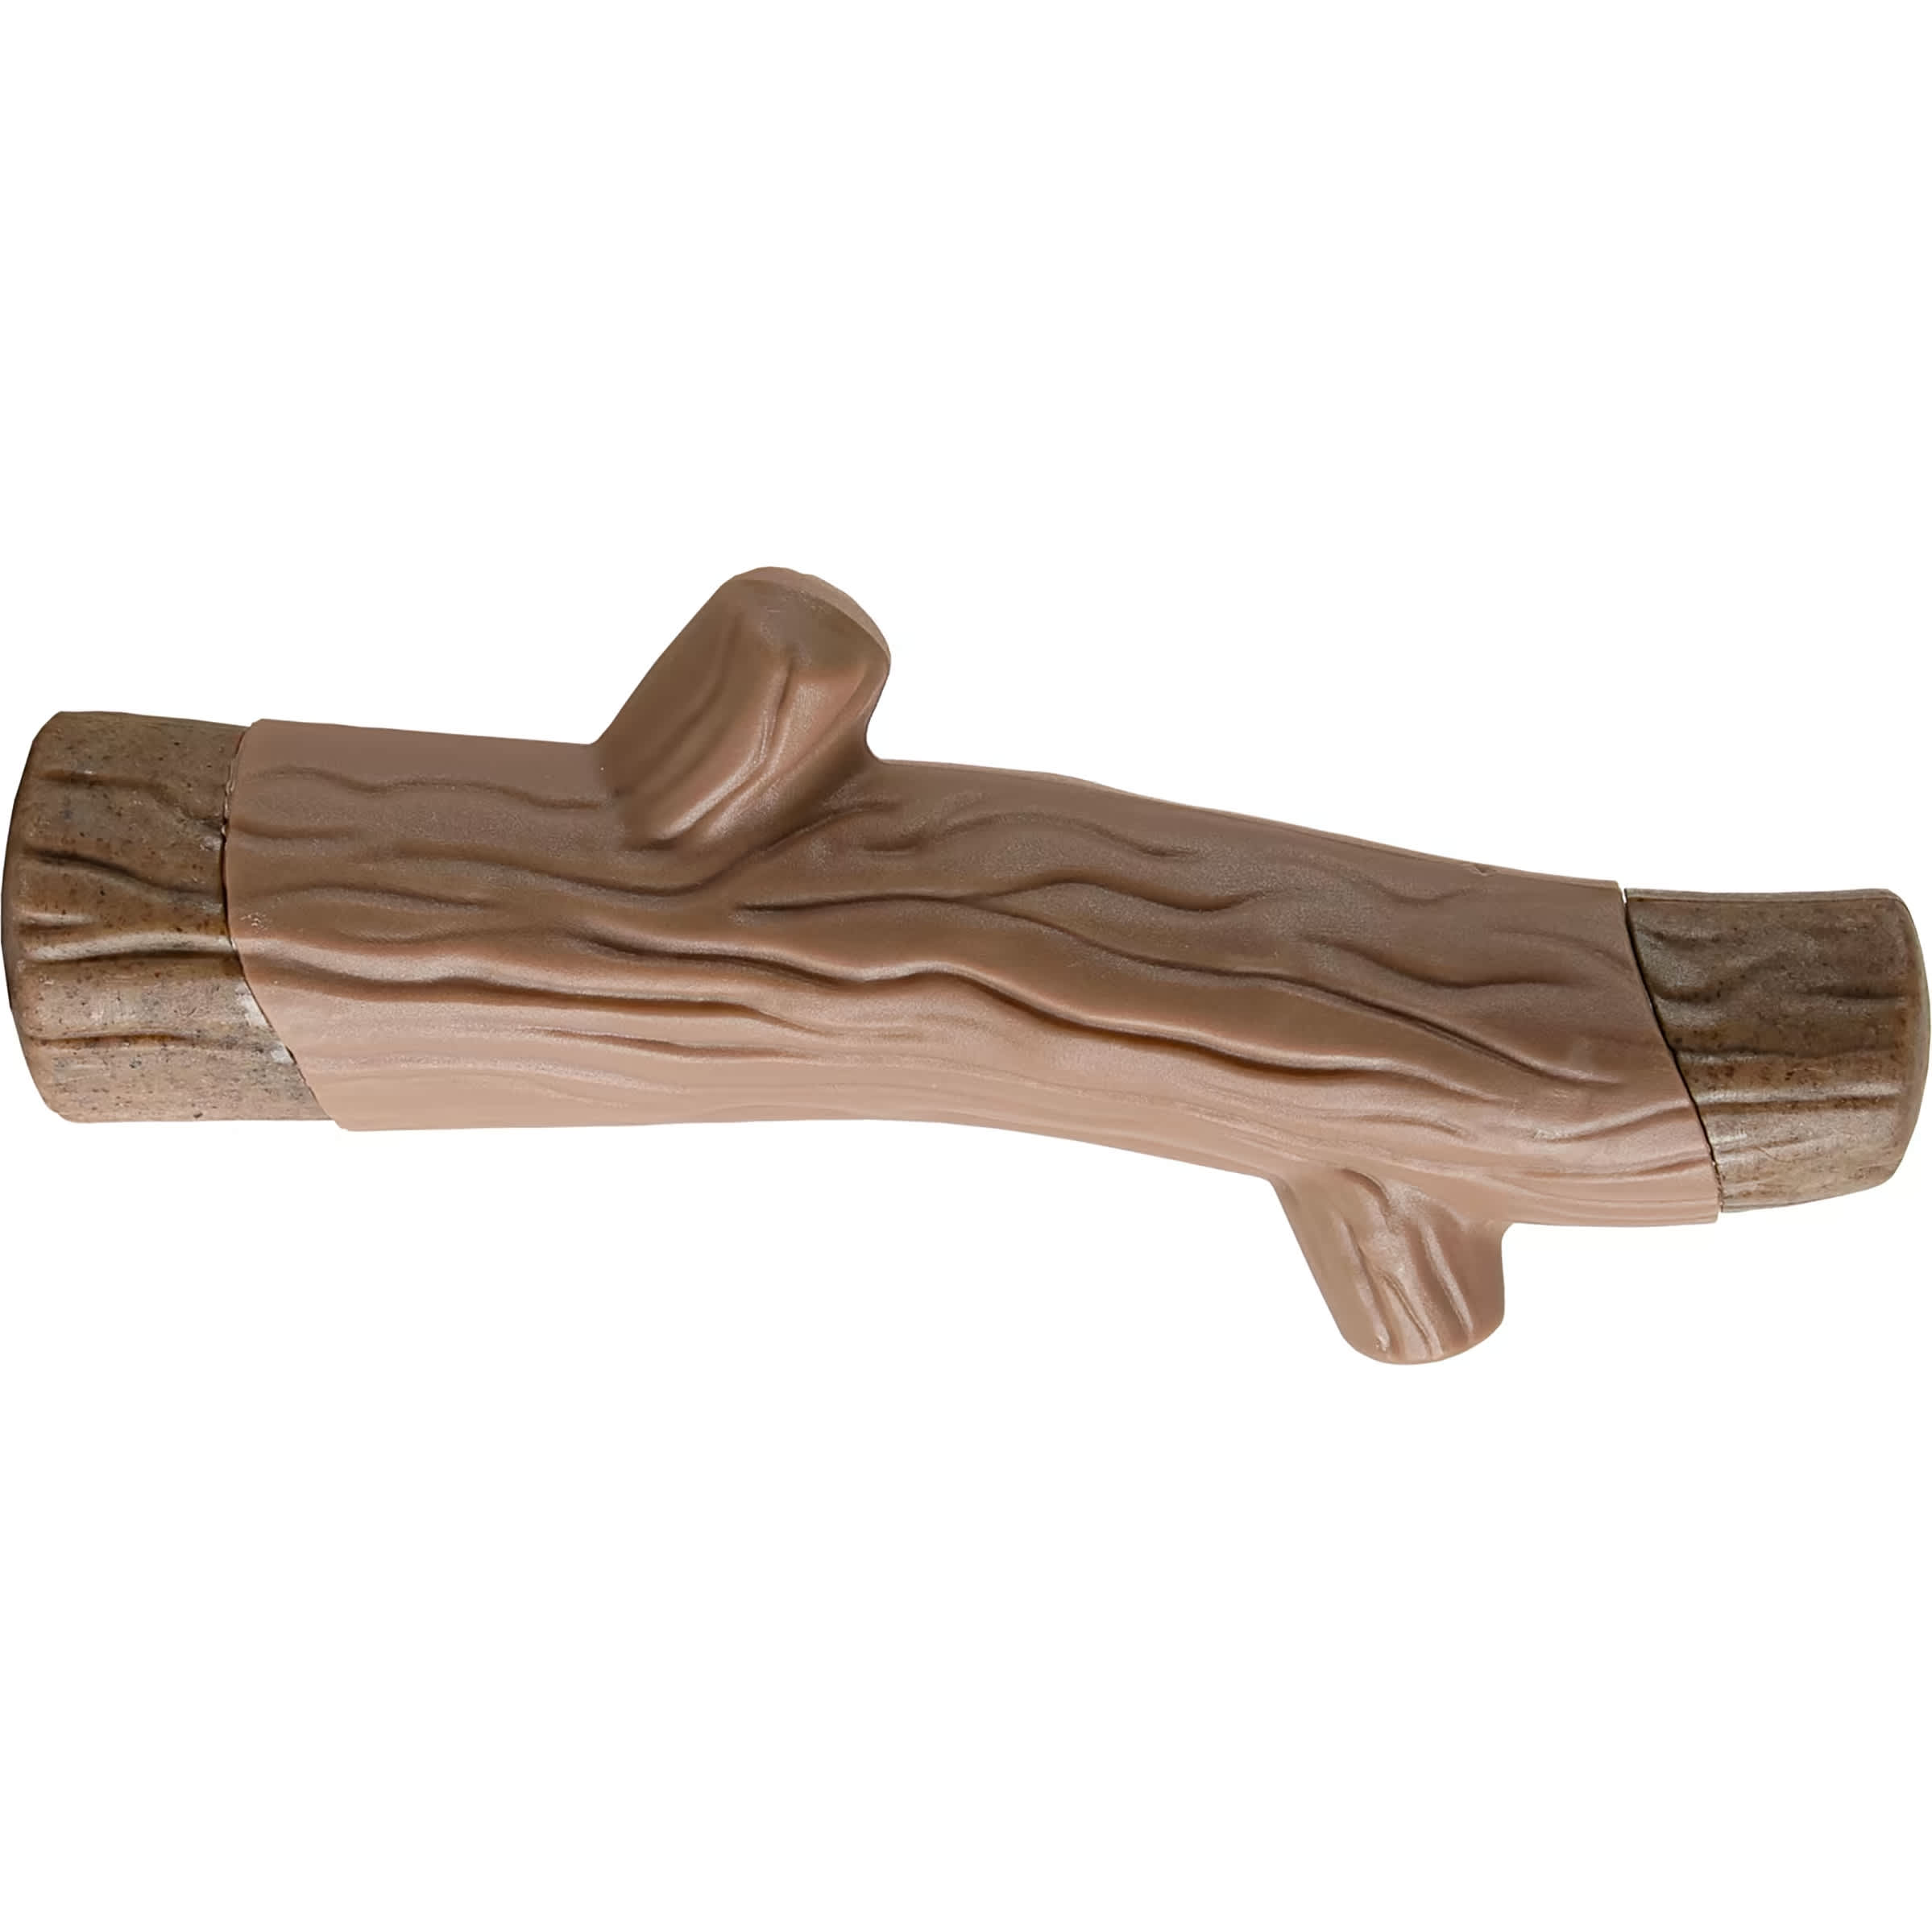 Cabela’s Bonetics® Wood-Scented Stick Chew Toy